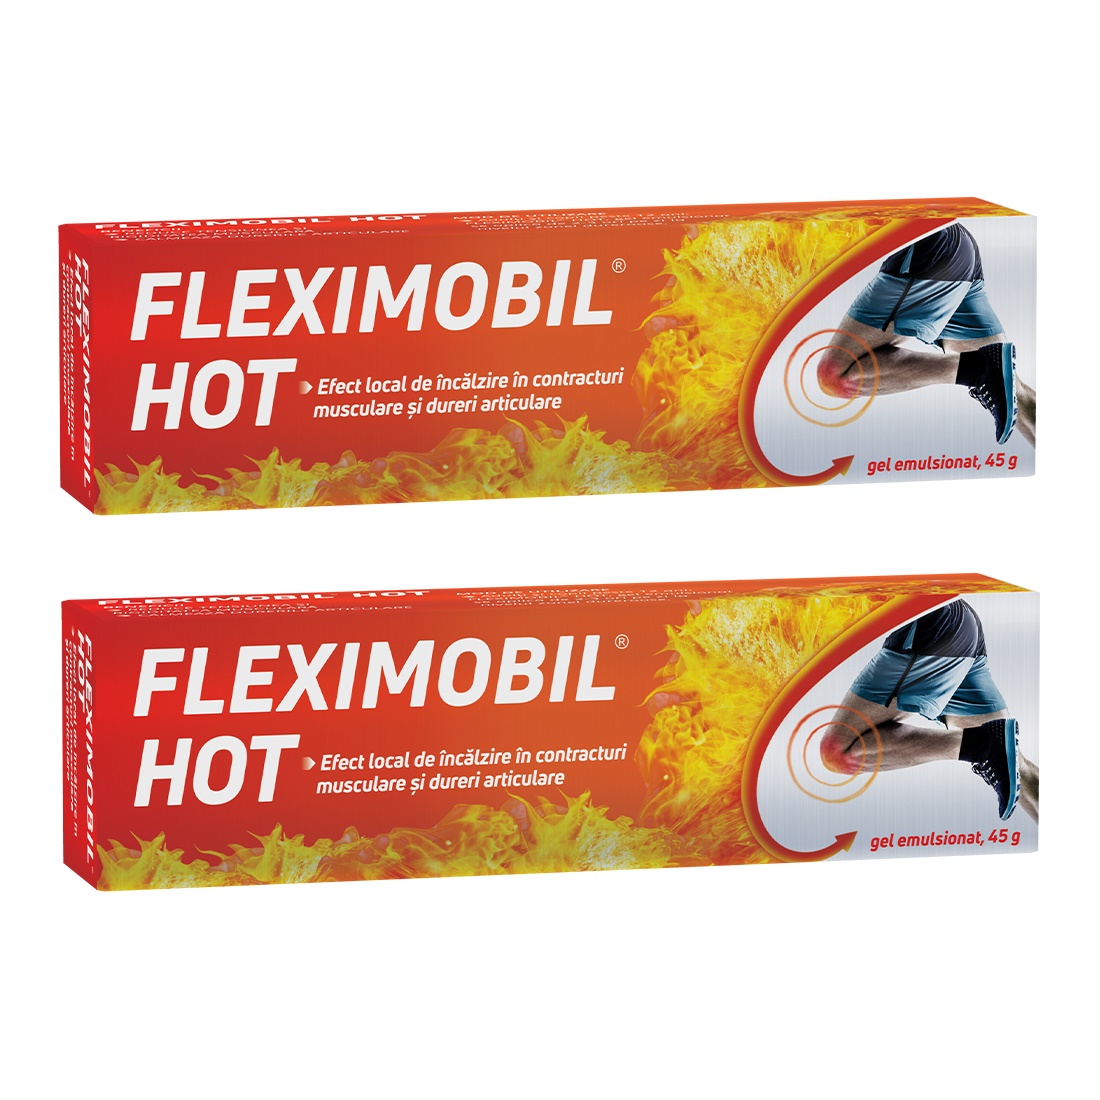 Fleximobil HOT gel emulsionant x 45 g, 1+1 cadou